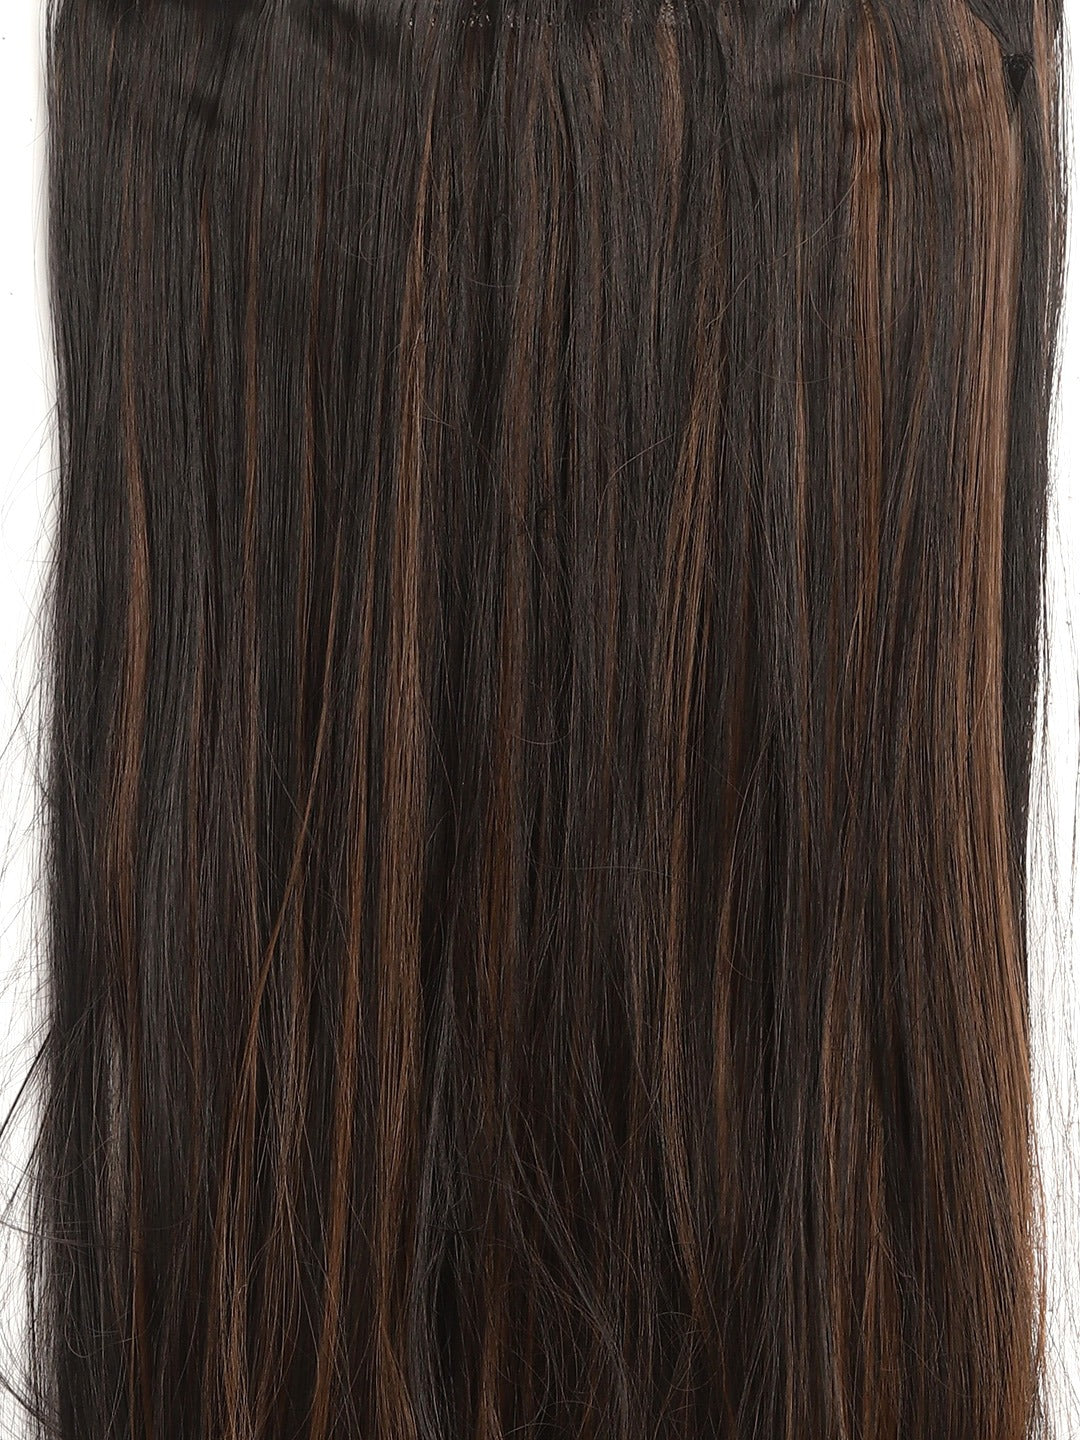 Blueberry brown / golden 5 Clips Straight premium Hair Extension